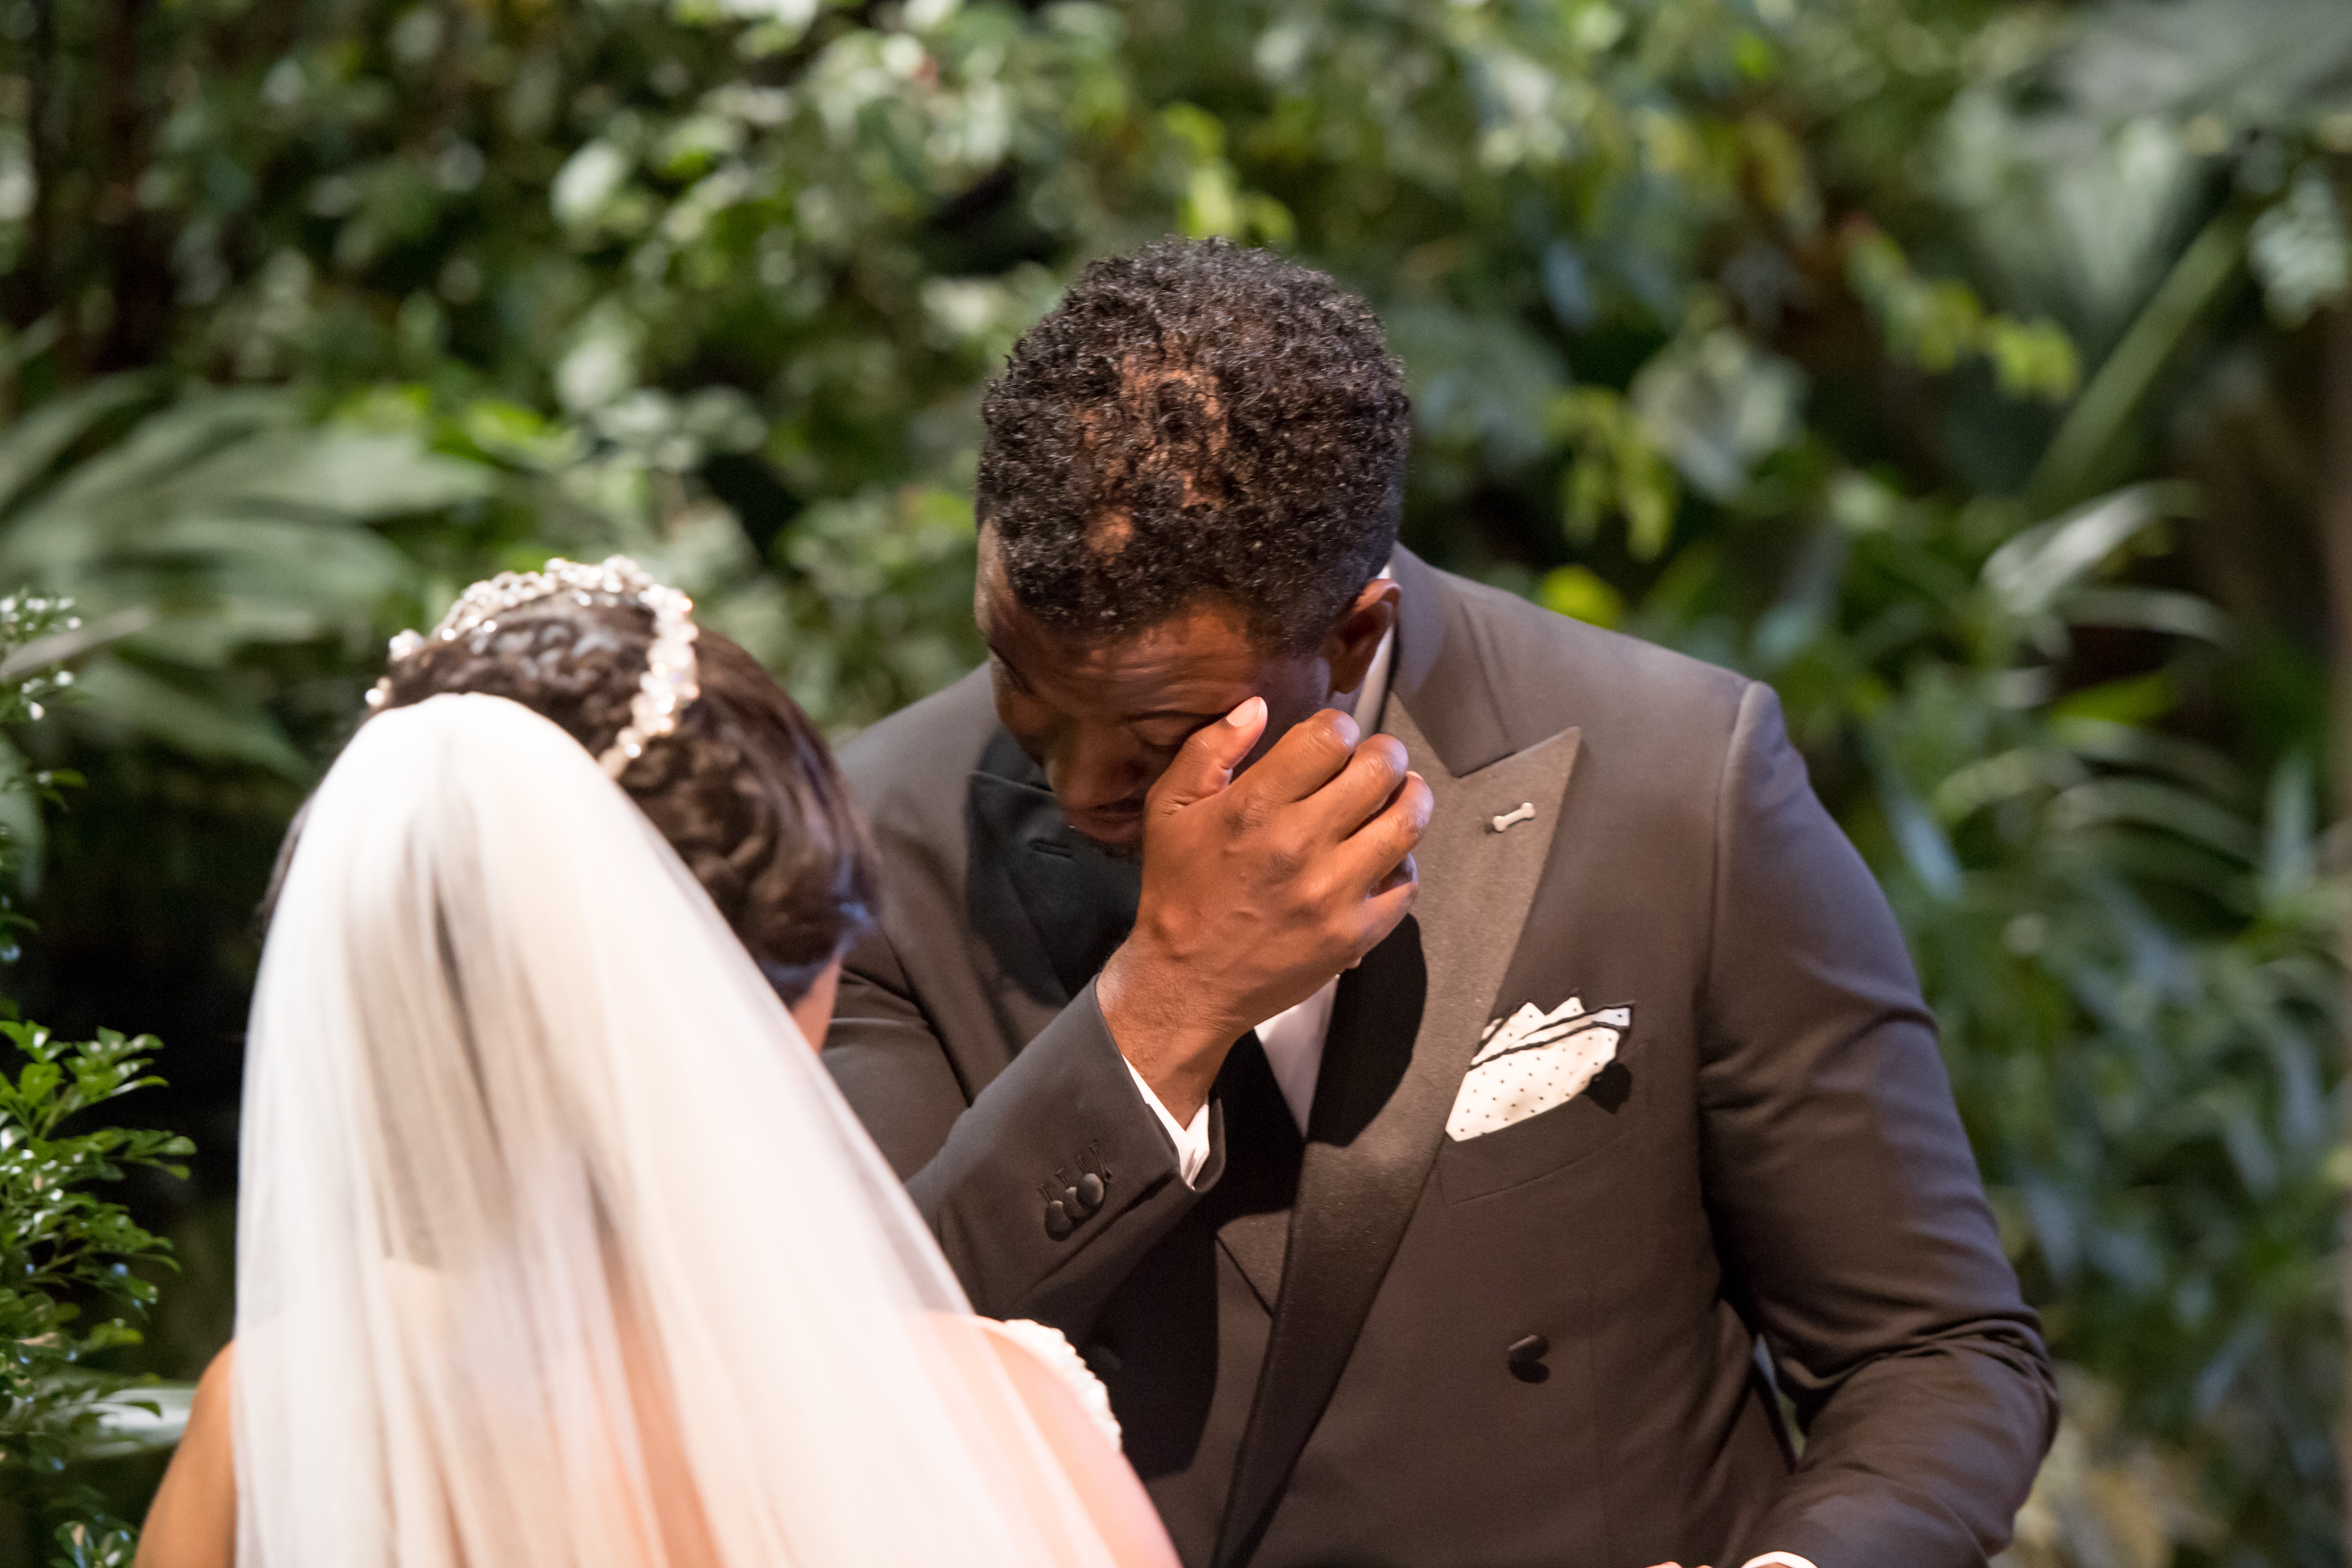 Bridal Bliss: Daniel And Natasha's Glam Wedding Was So Lit
